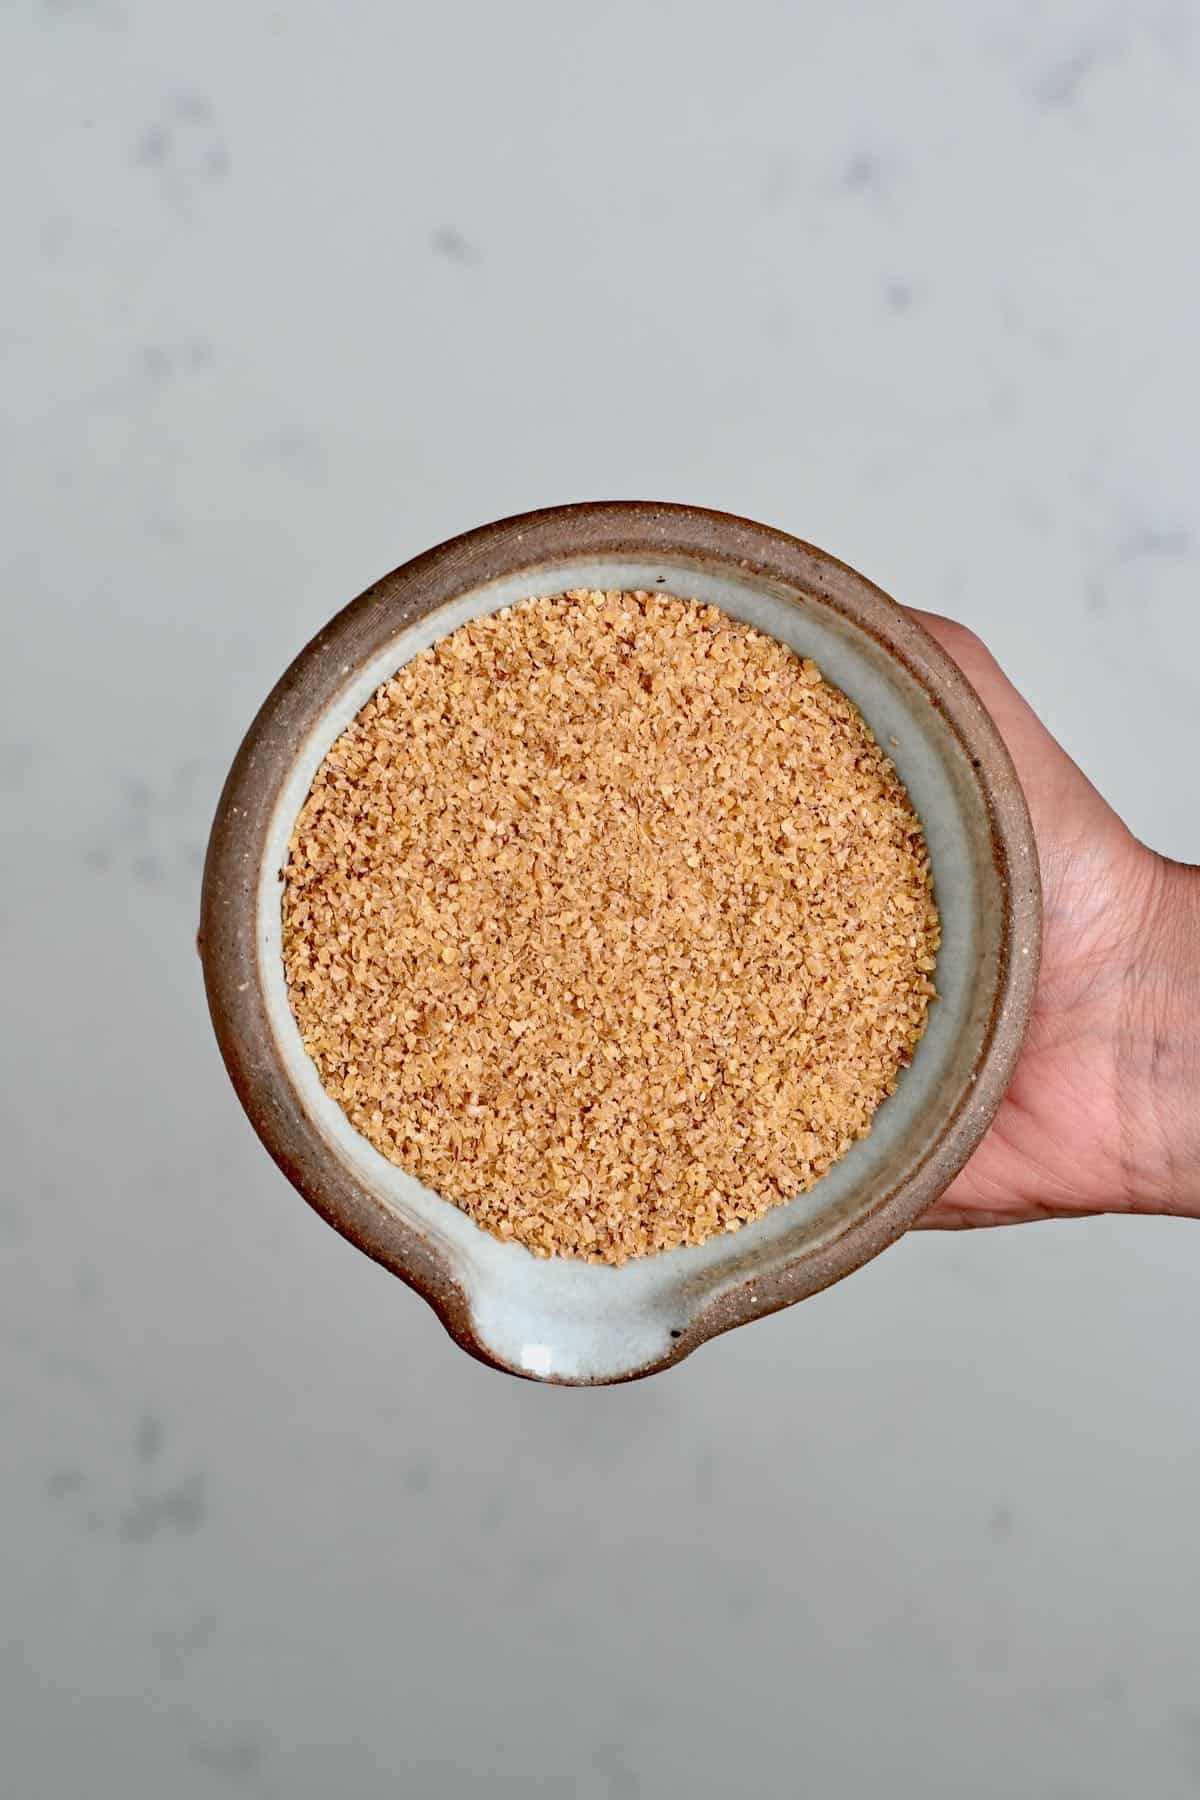 A bowl with homemade bulgur wheat